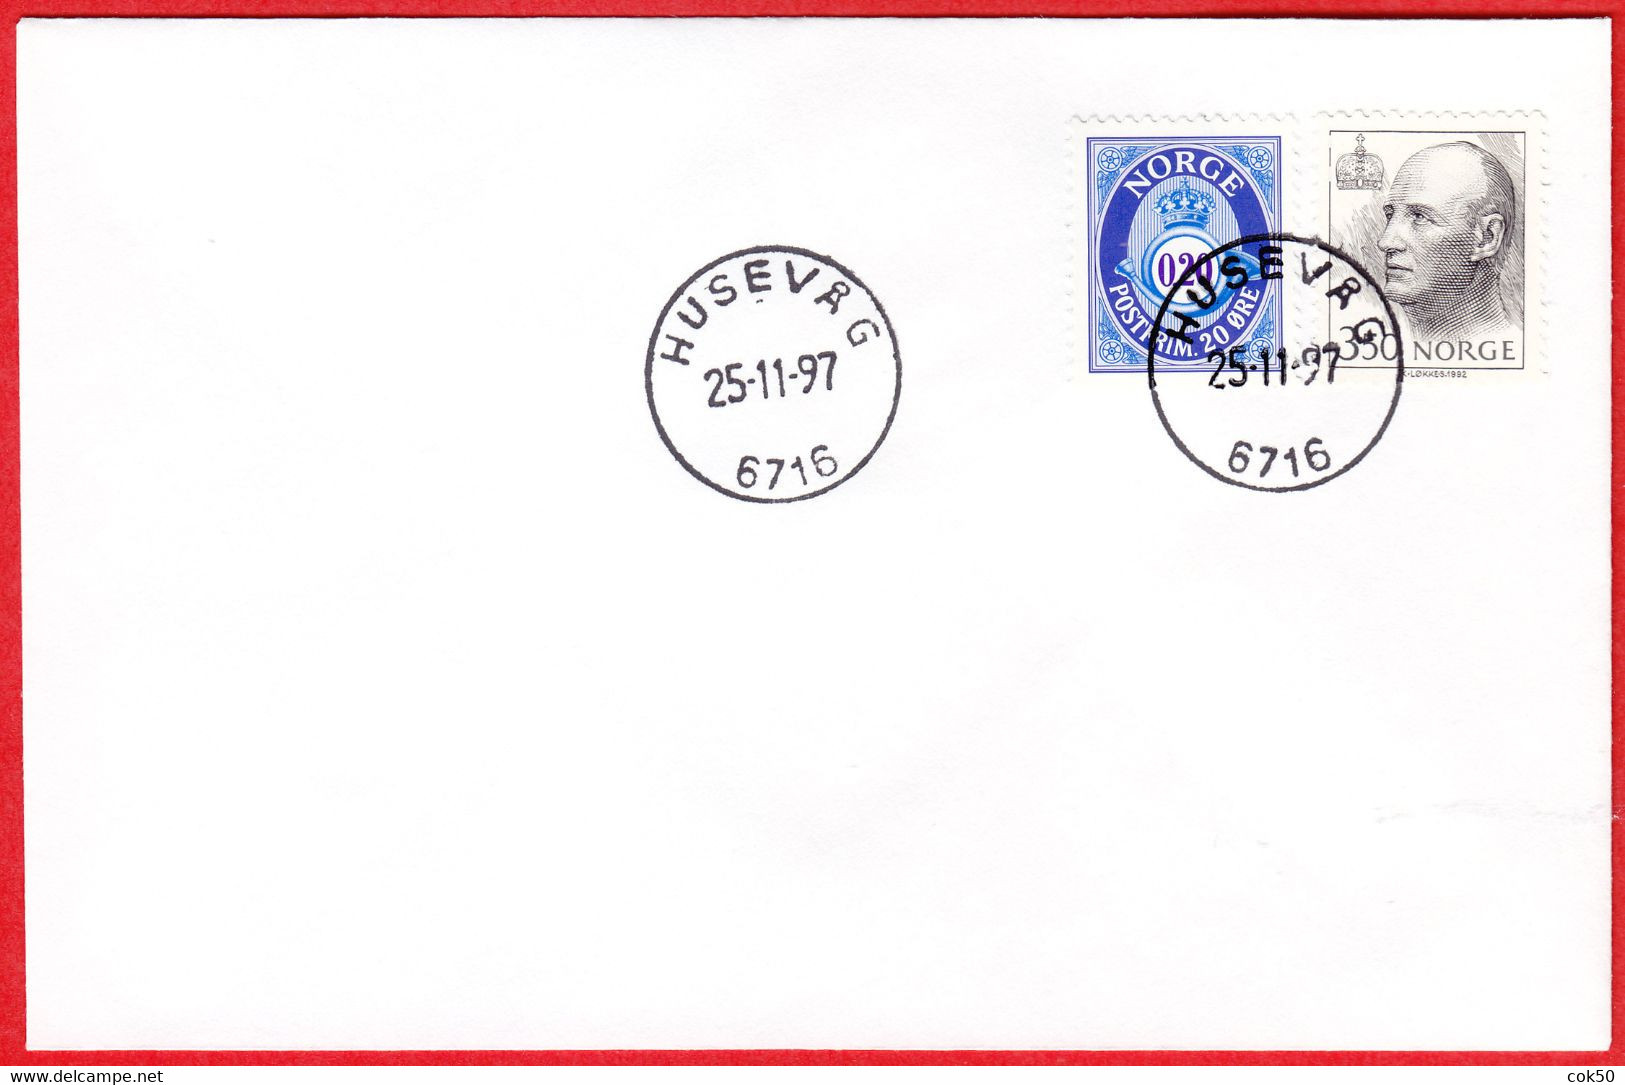 NORWAY - 6716  HUSEVÅG (Sogn & Fj. County) = Vestland From Jan.1 2020 - Last Day/postoffice Closed On 1997.11.25 - Local Post Stamps